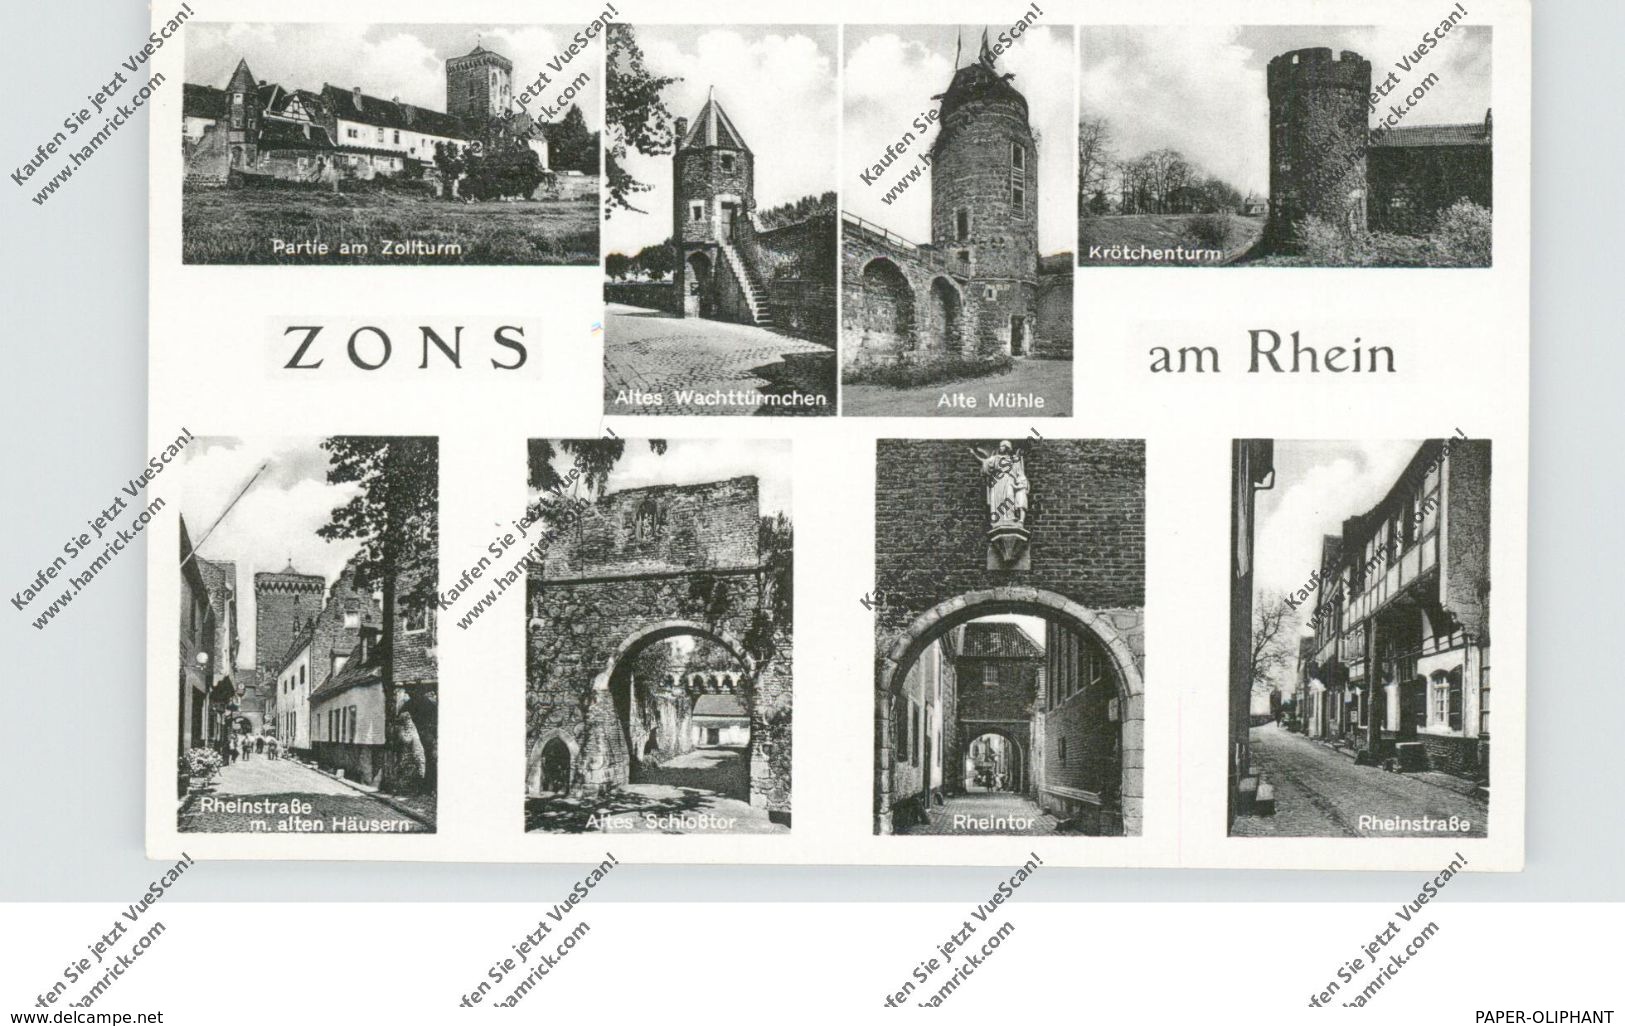 4047 DORMAGEN - ZONS, Rheinstrasse, Krötschenturm, Altes Schloßtor..., 1952 - Dormagen